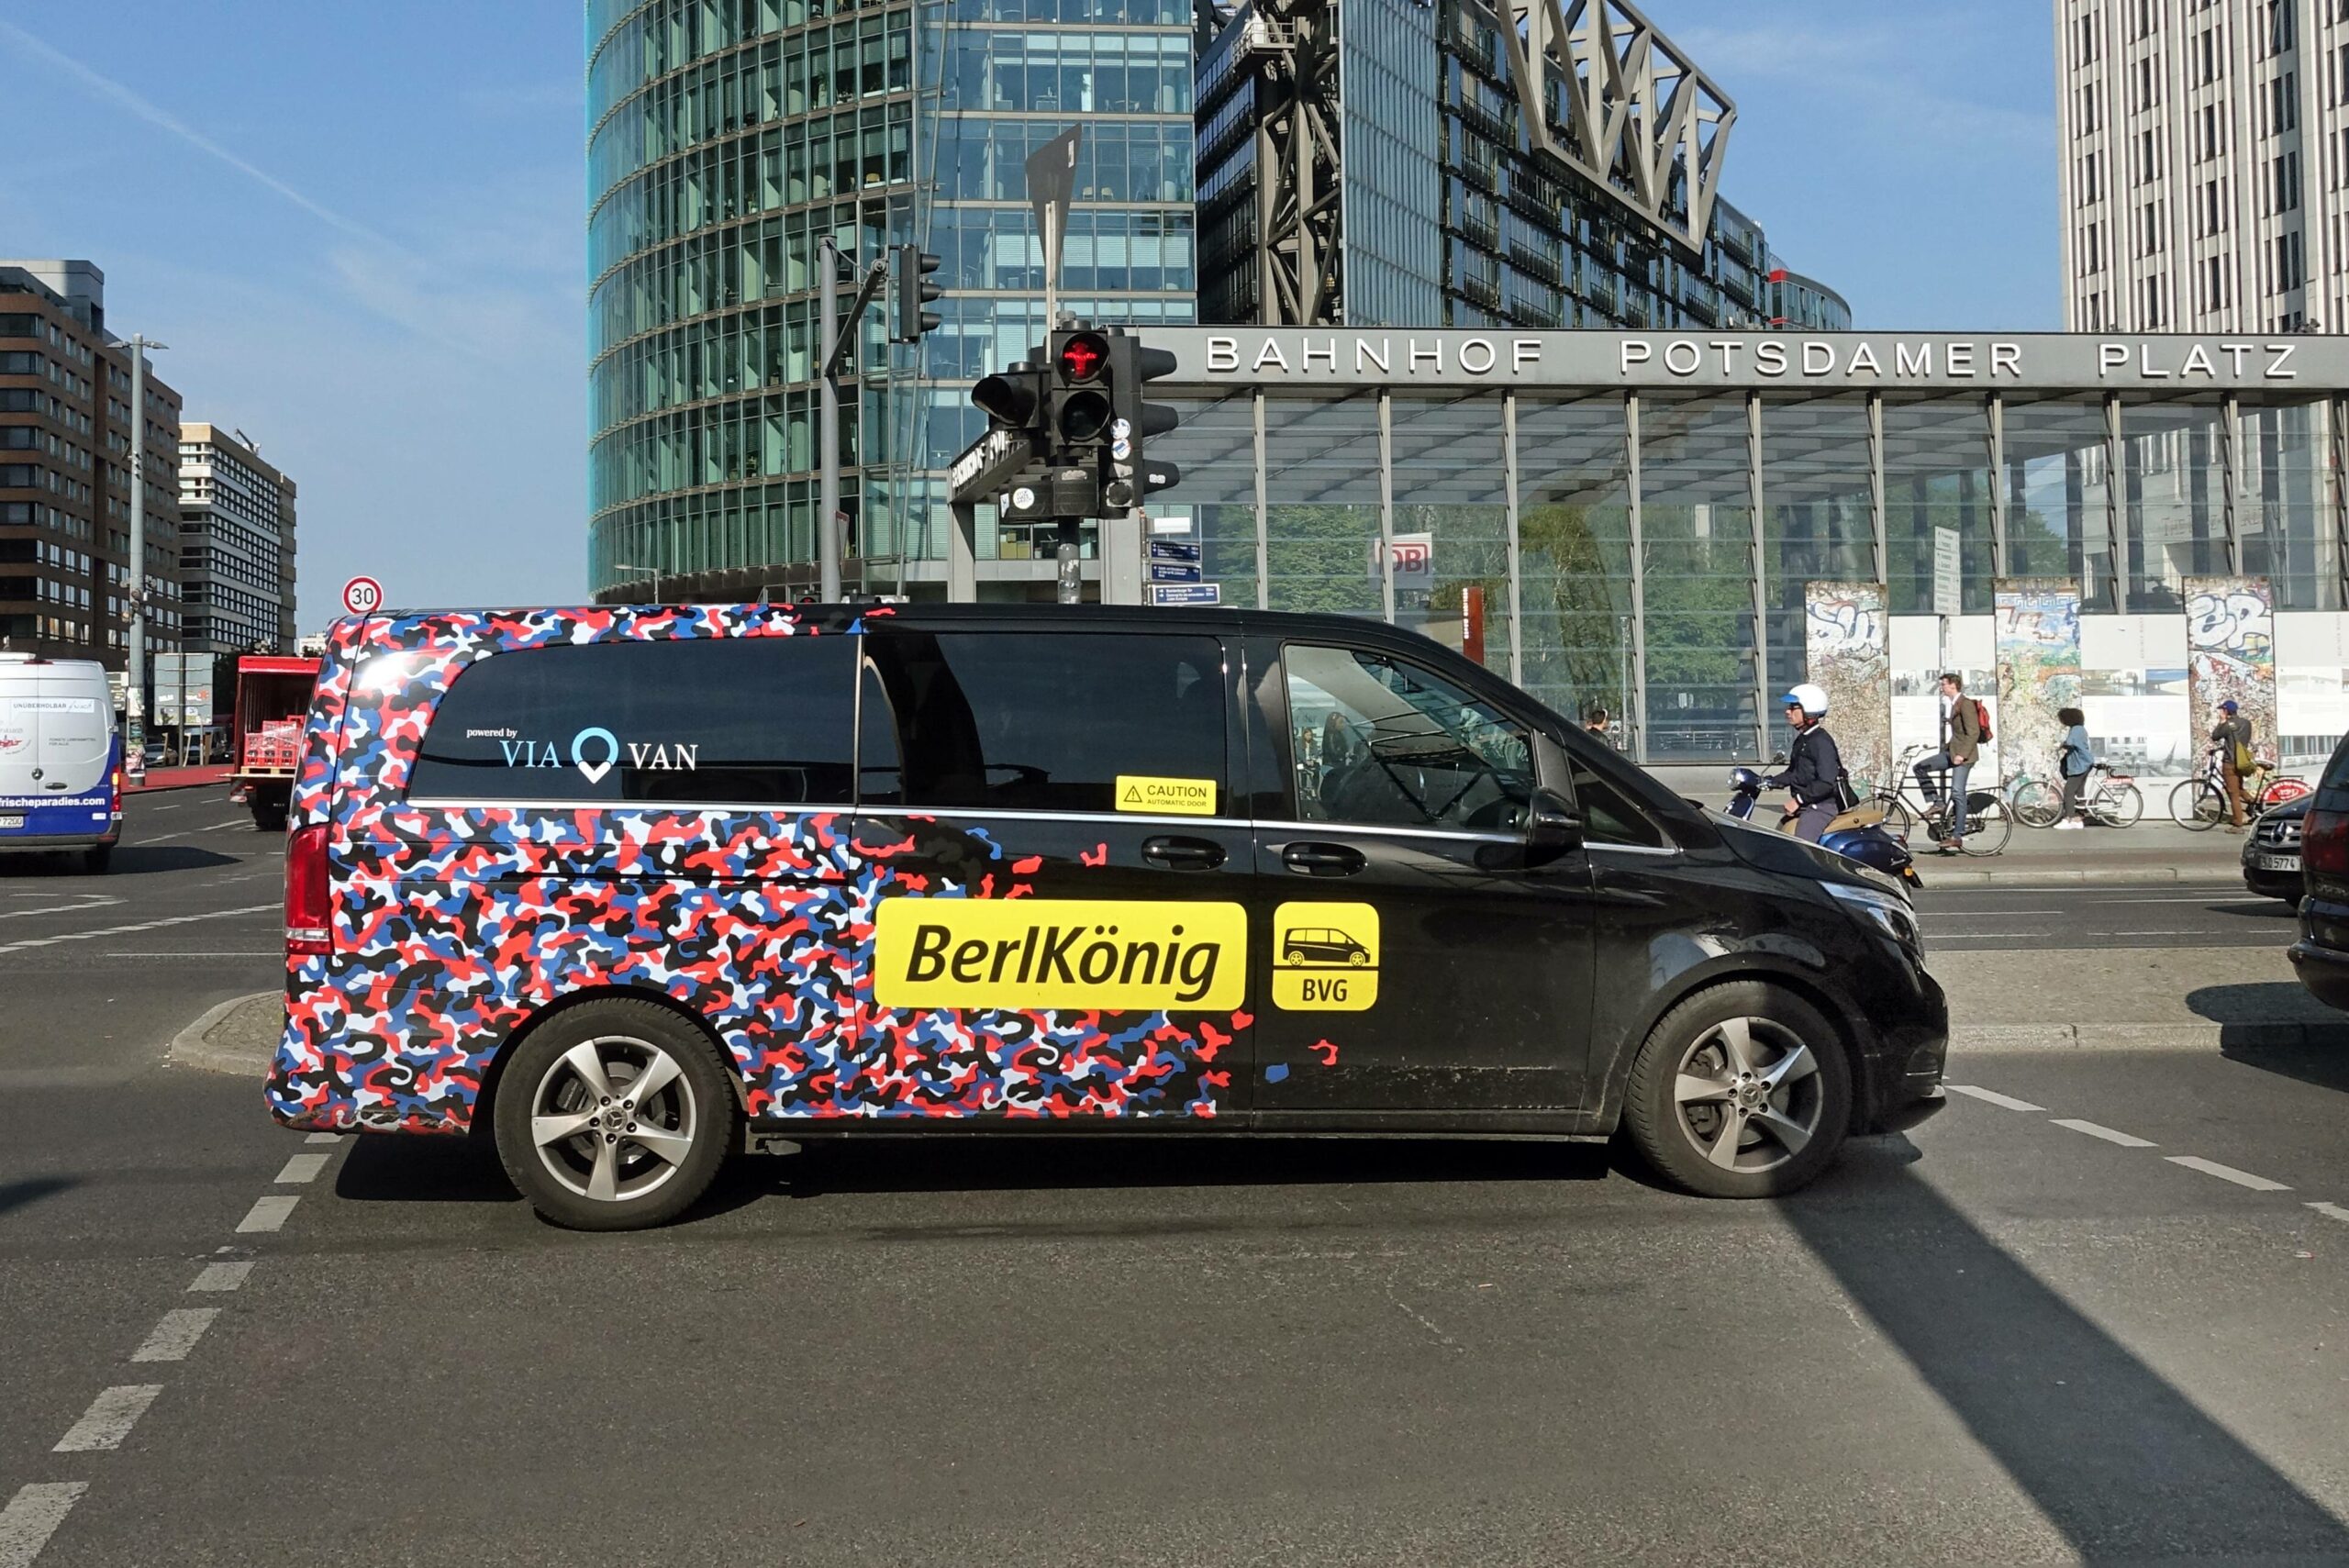 Berlin Taxi Geschichte: BVG-Sammeltaxi BerlKönig, 2019. Foto: Imago/ Frank Sorge